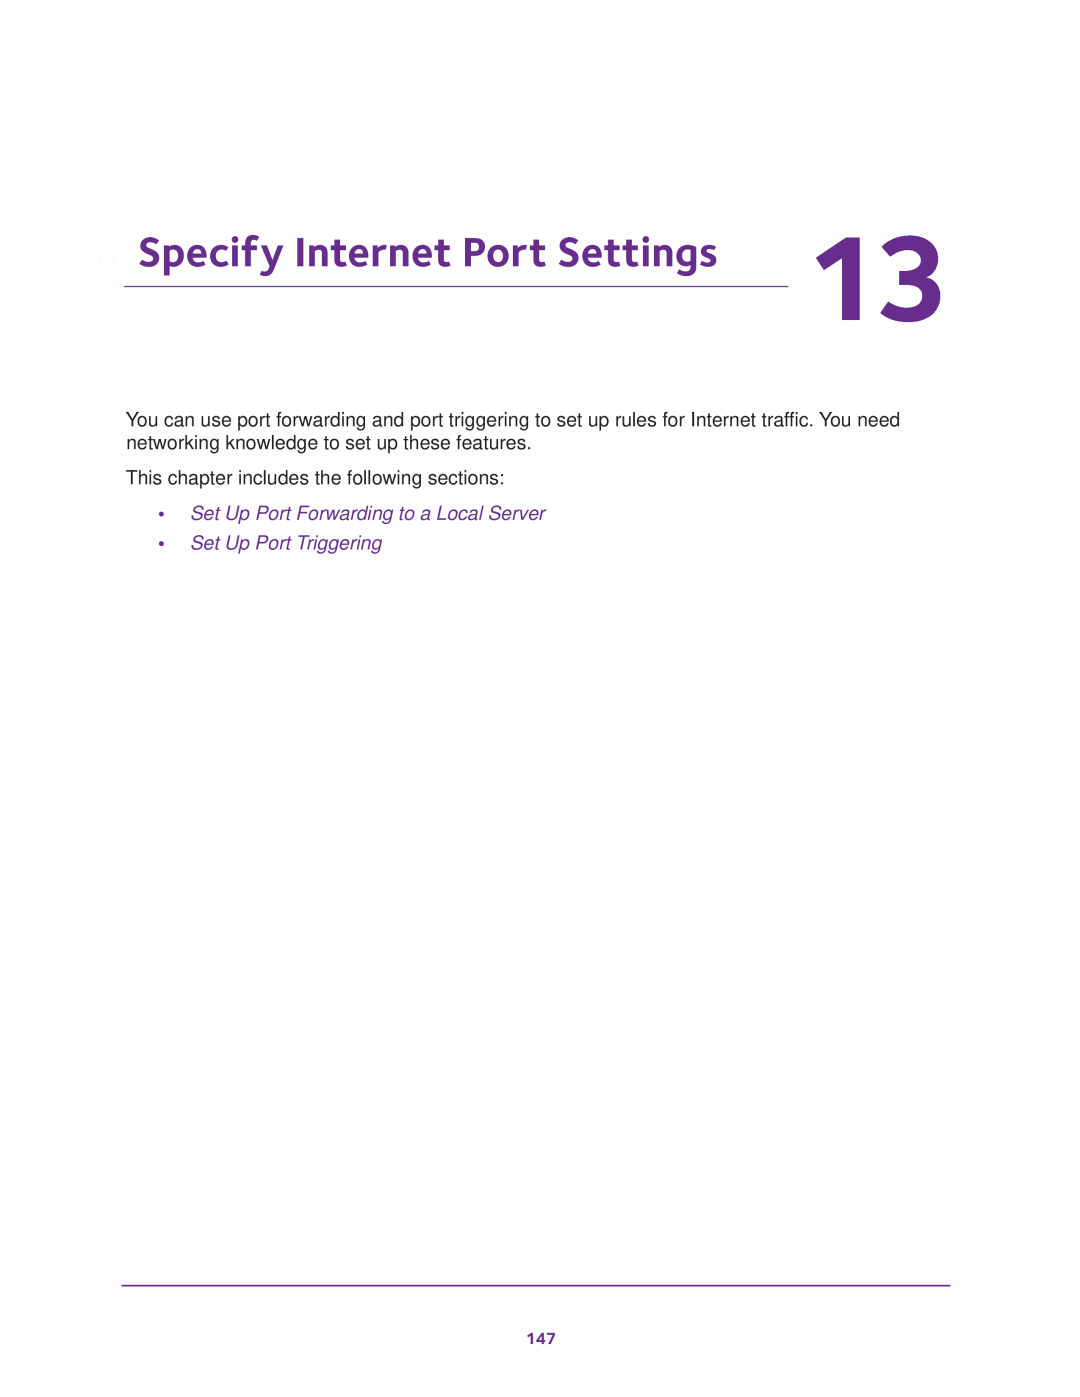 NETGEAR Model R7000 Specify Internet Port Settings, Set Up Port Forwarding to a Local Server Set Up Port Triggering 